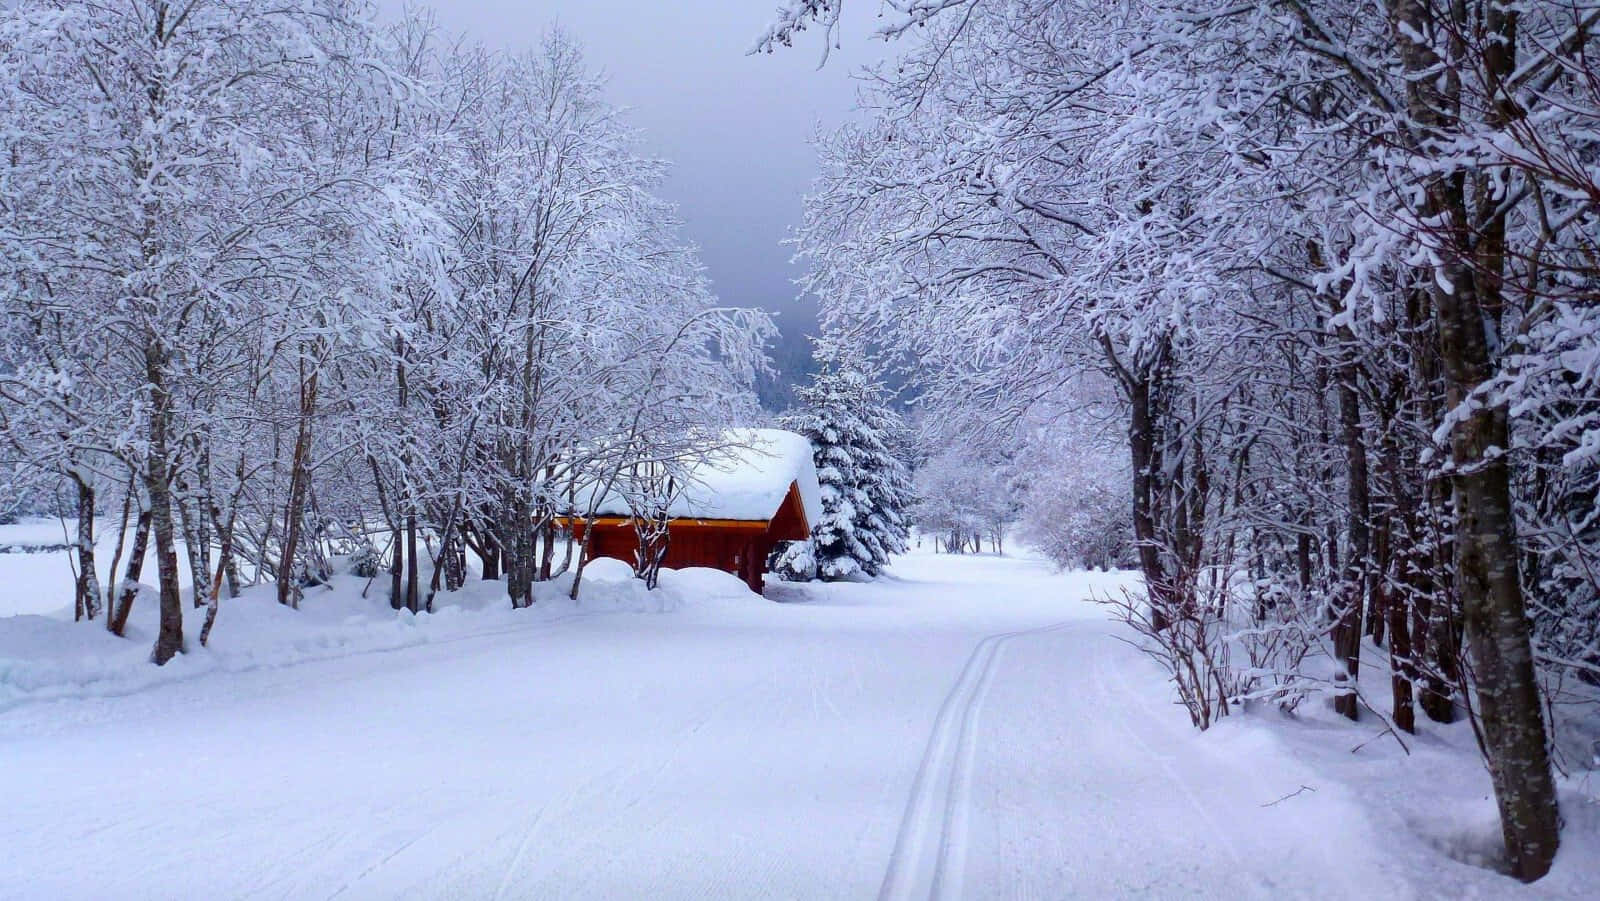 Enjoy the beauty of the winter season!